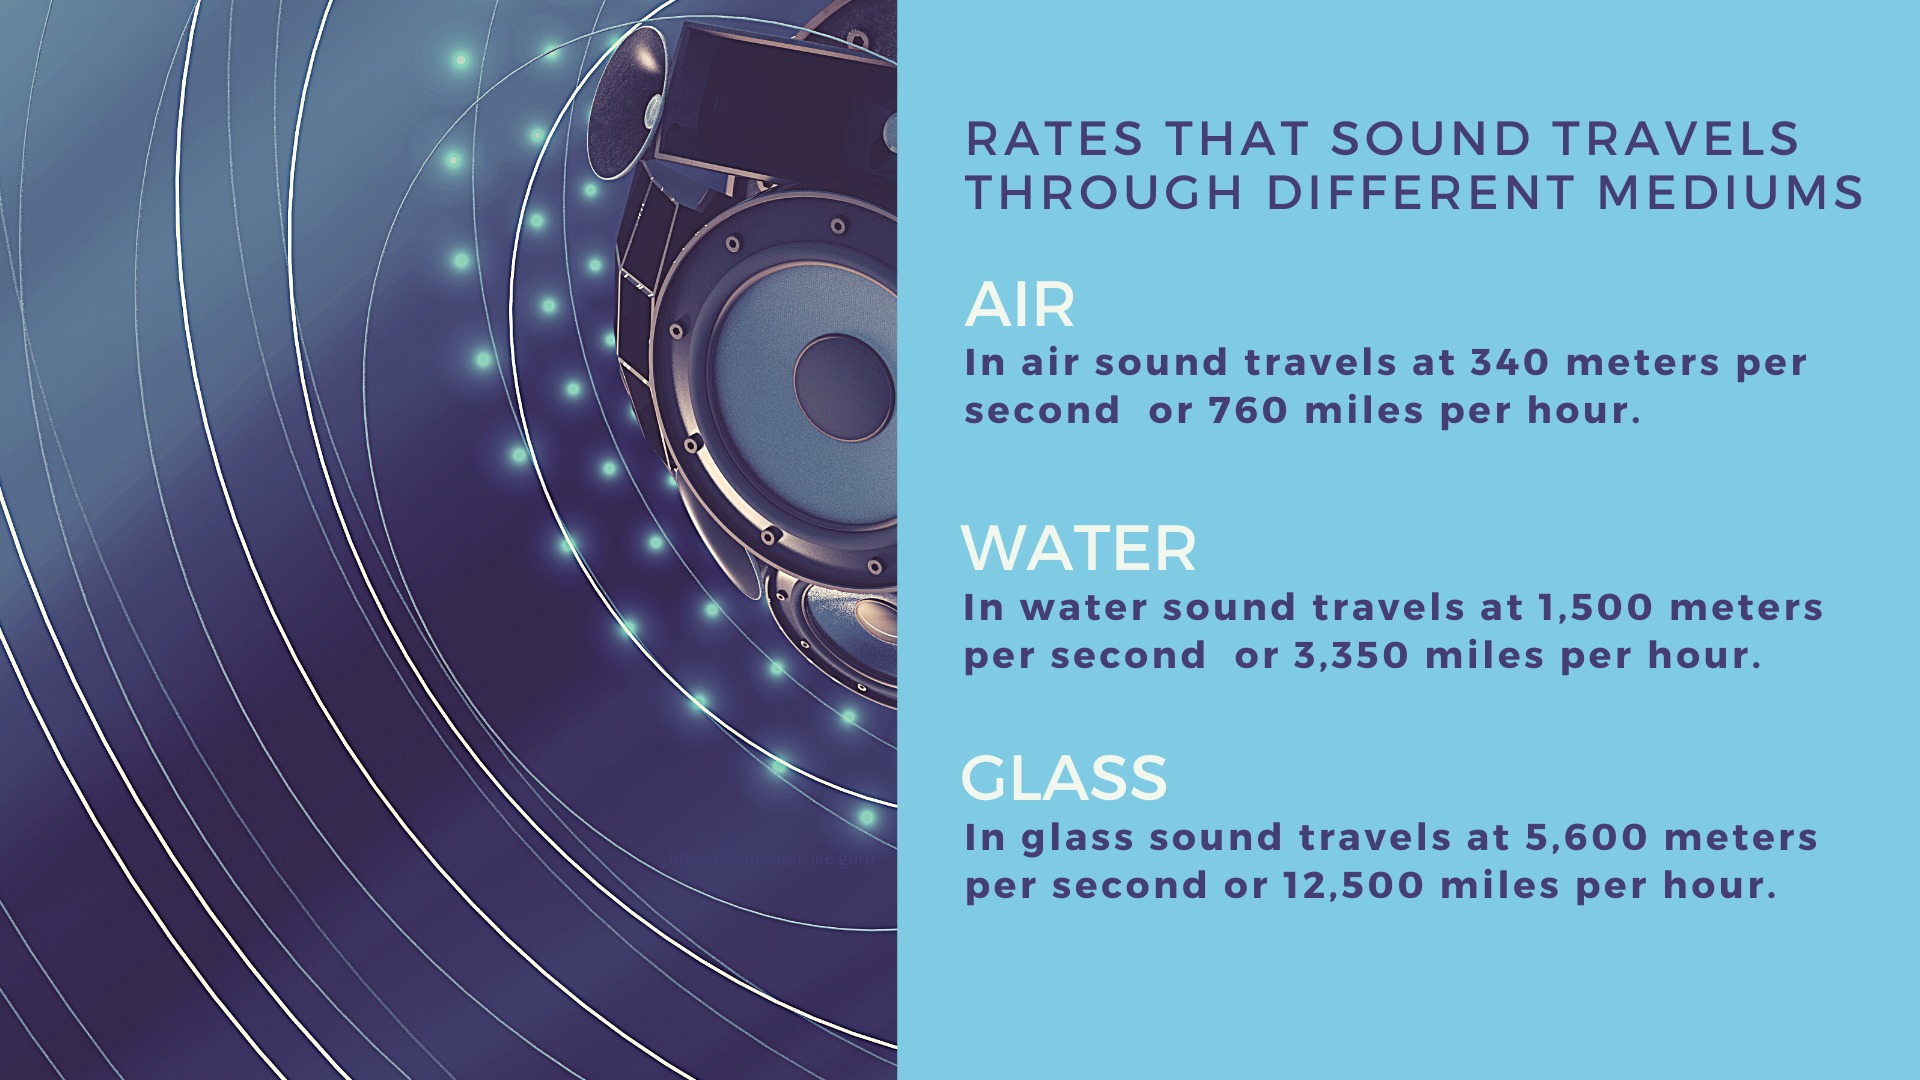 Rates that sound travels through various mediums